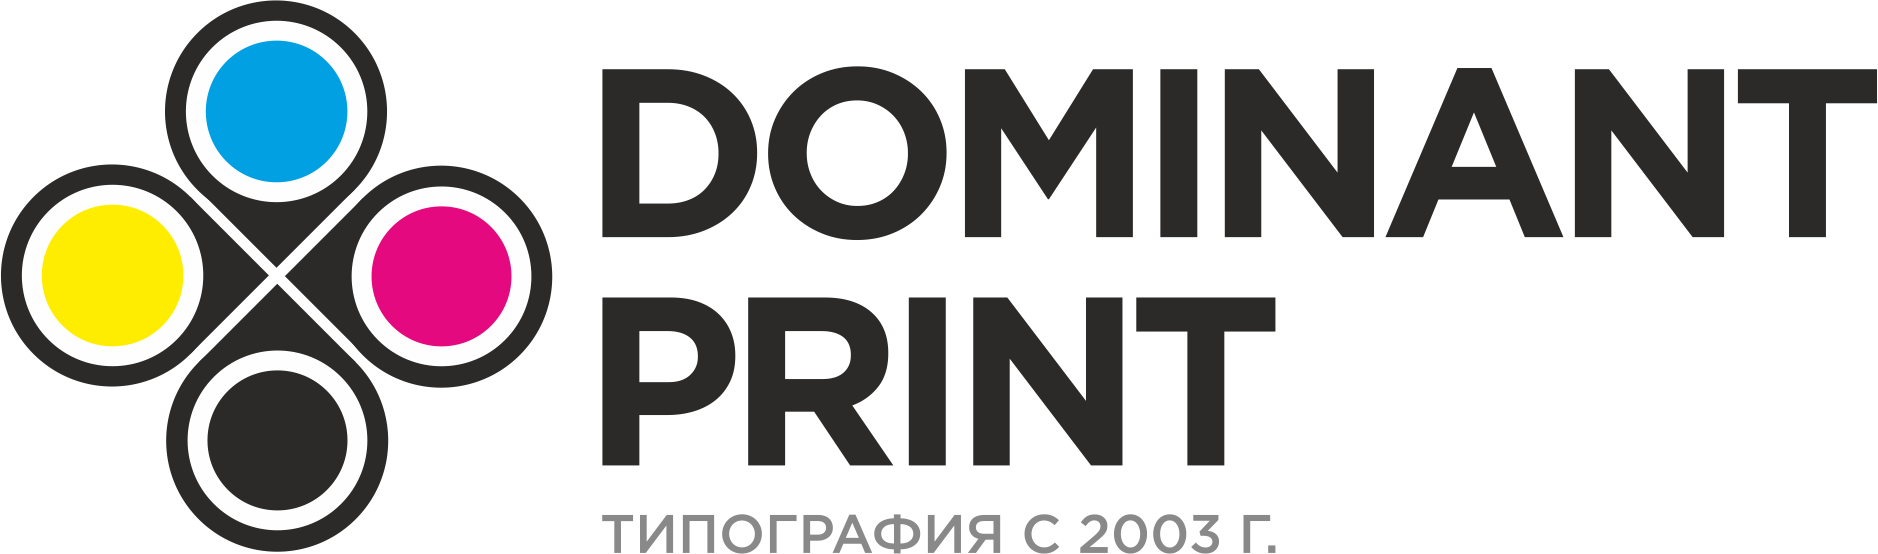 Dominant Print